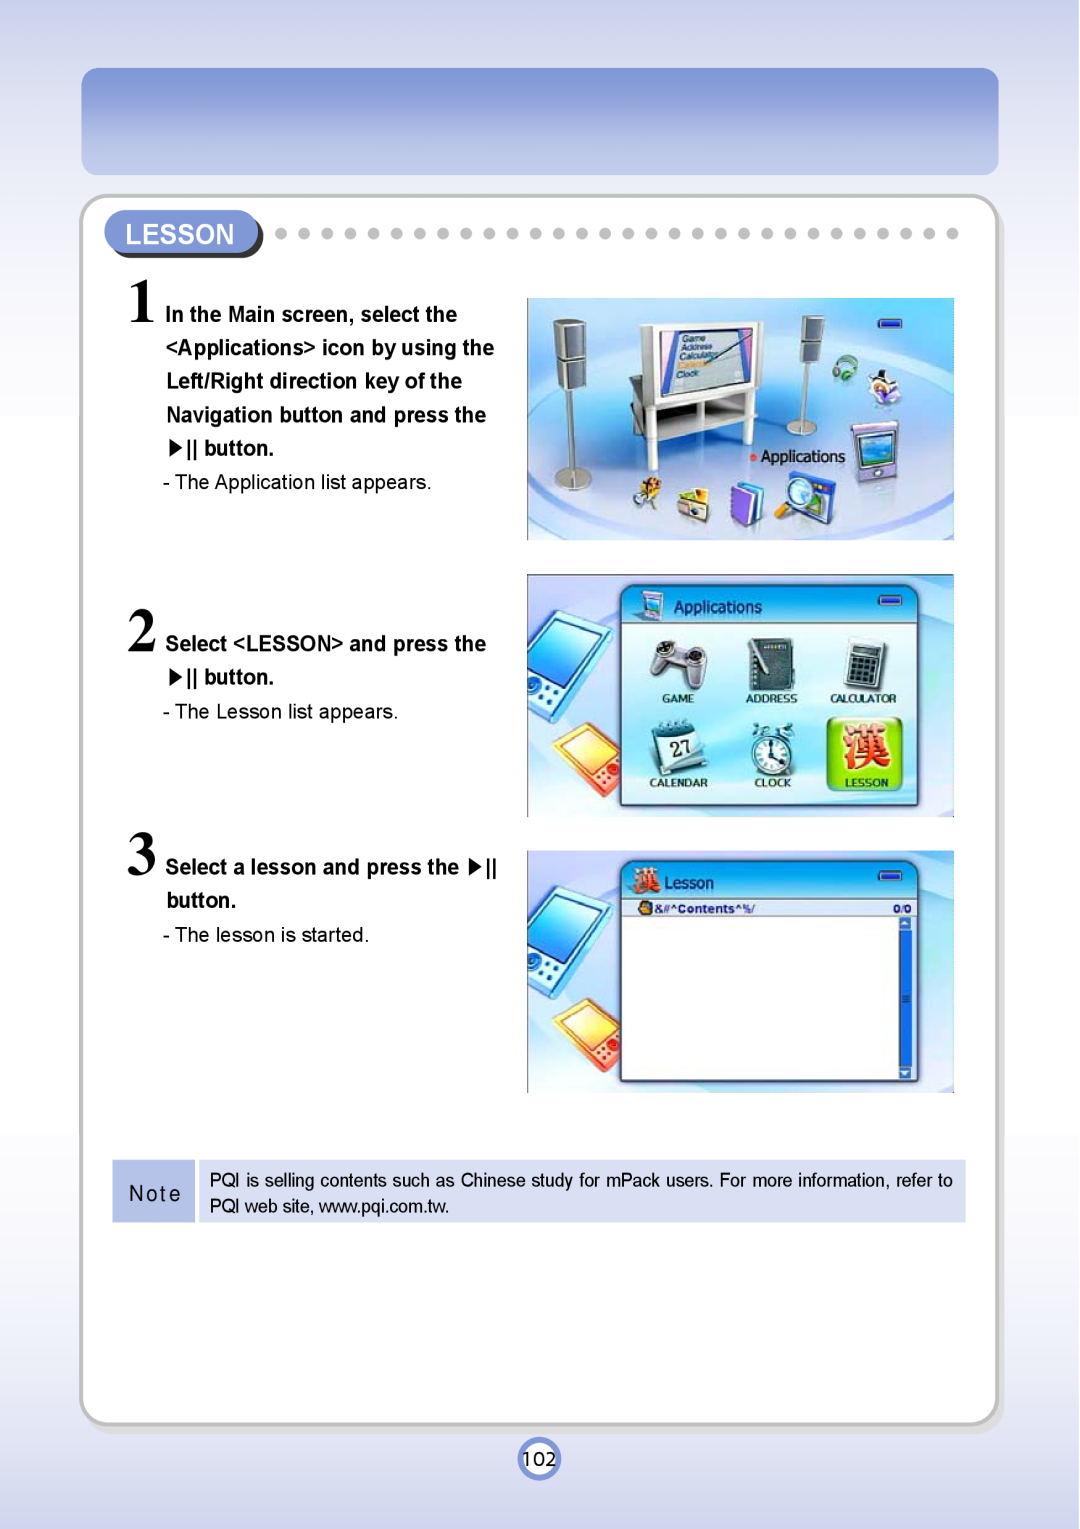 PQI P600 manual Lesson, Select LESSON and press the button, Select a lesson and press the button 